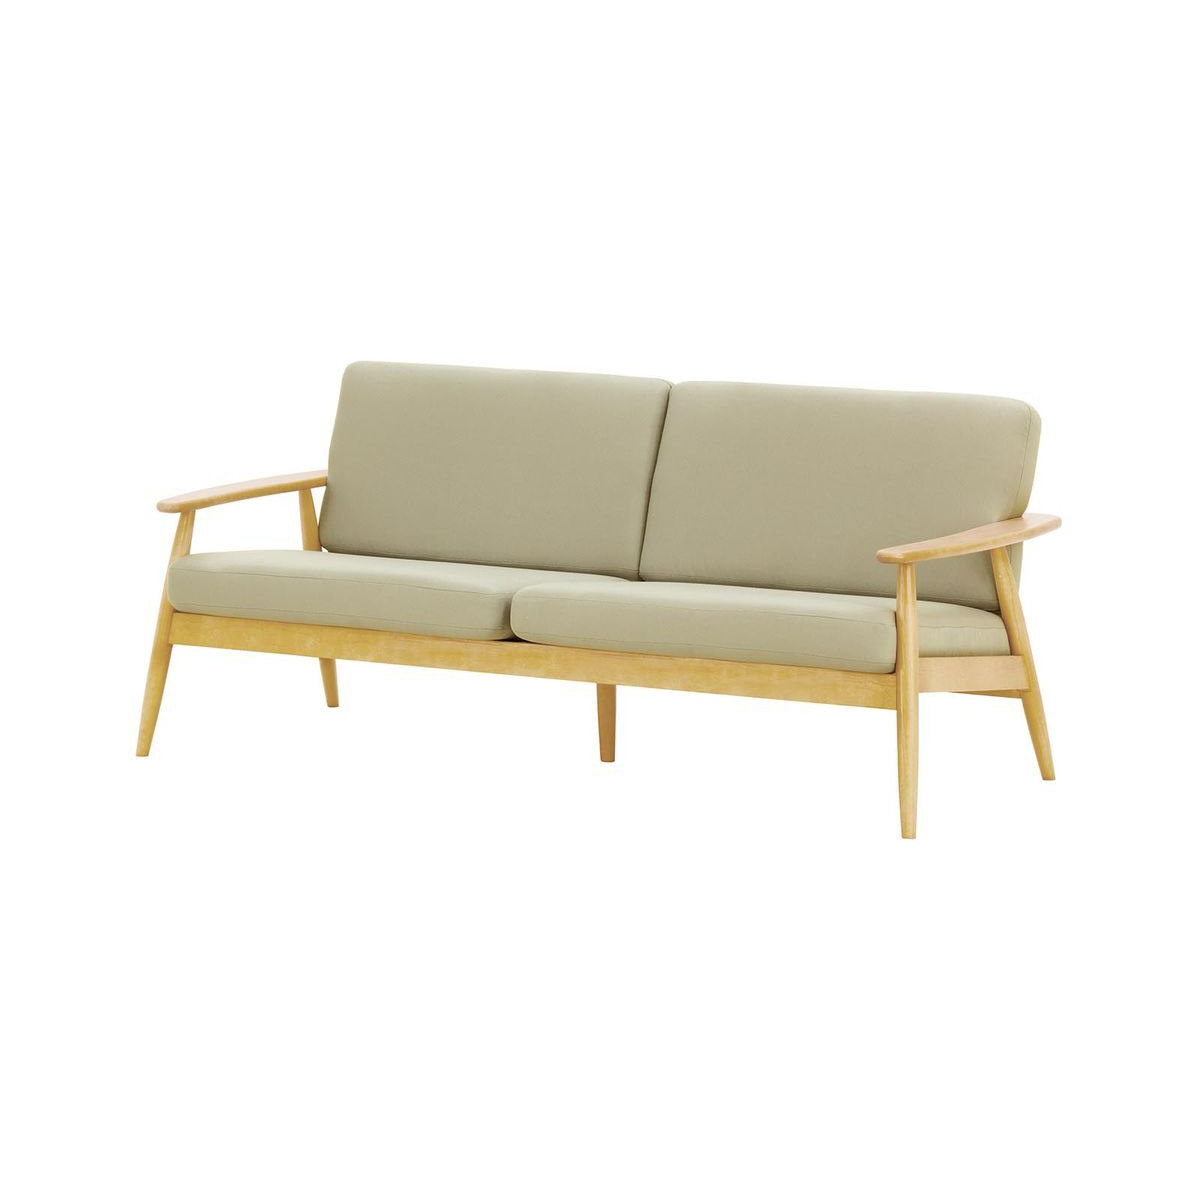 Demure Aqua 3 Seater Garden Sofa, cream, Leg colour: 8001 like oak - image 1